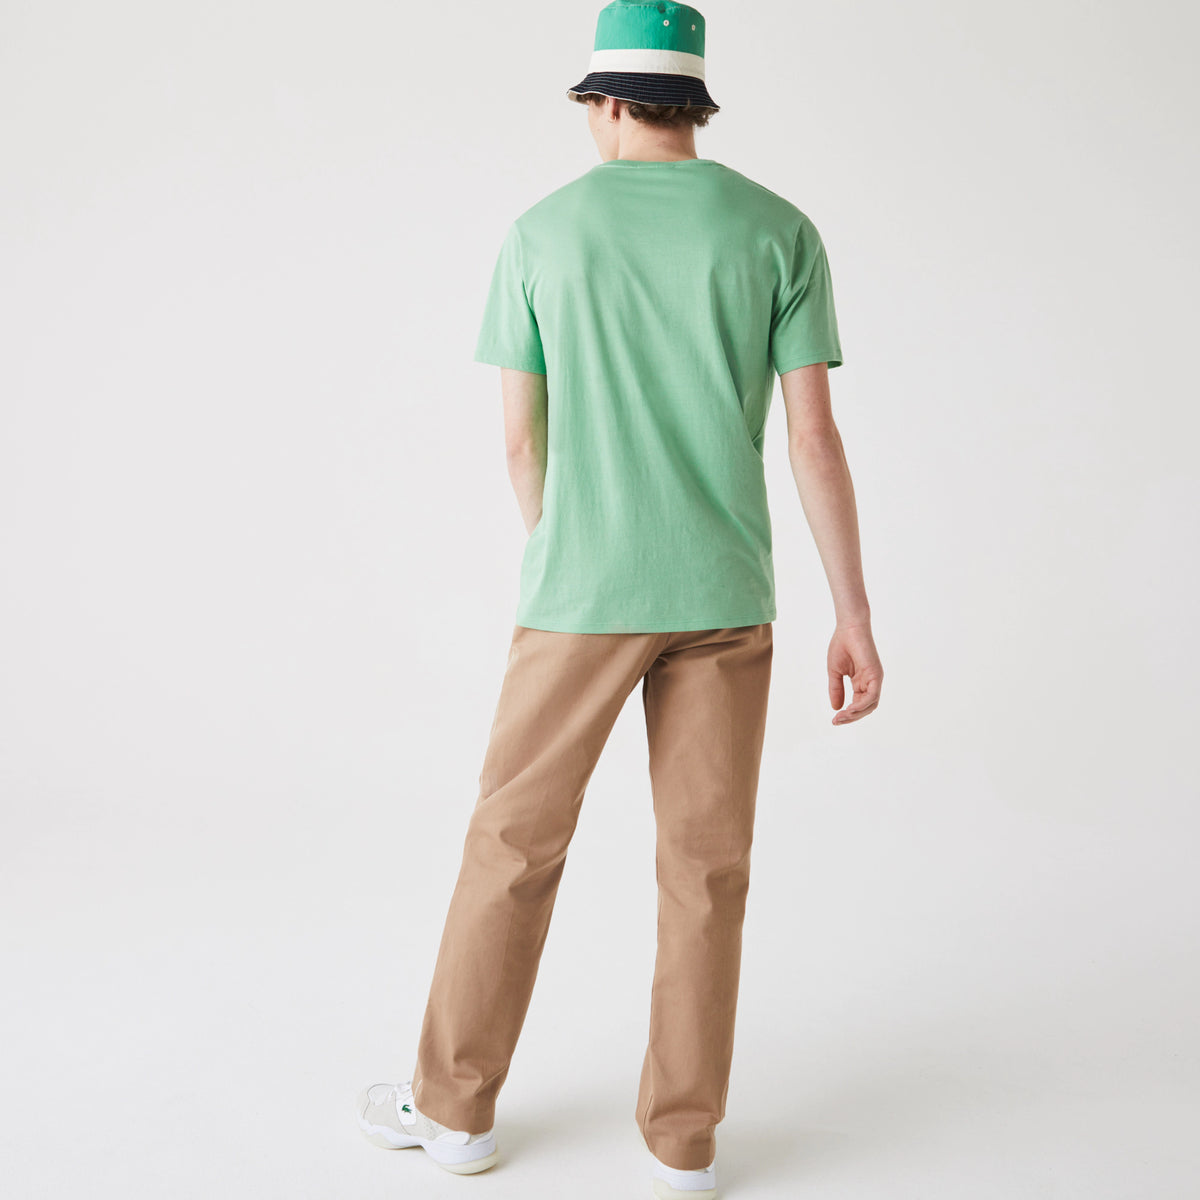 Men's V-neck Pima Cotton Jersey T-shirt - Green TTF